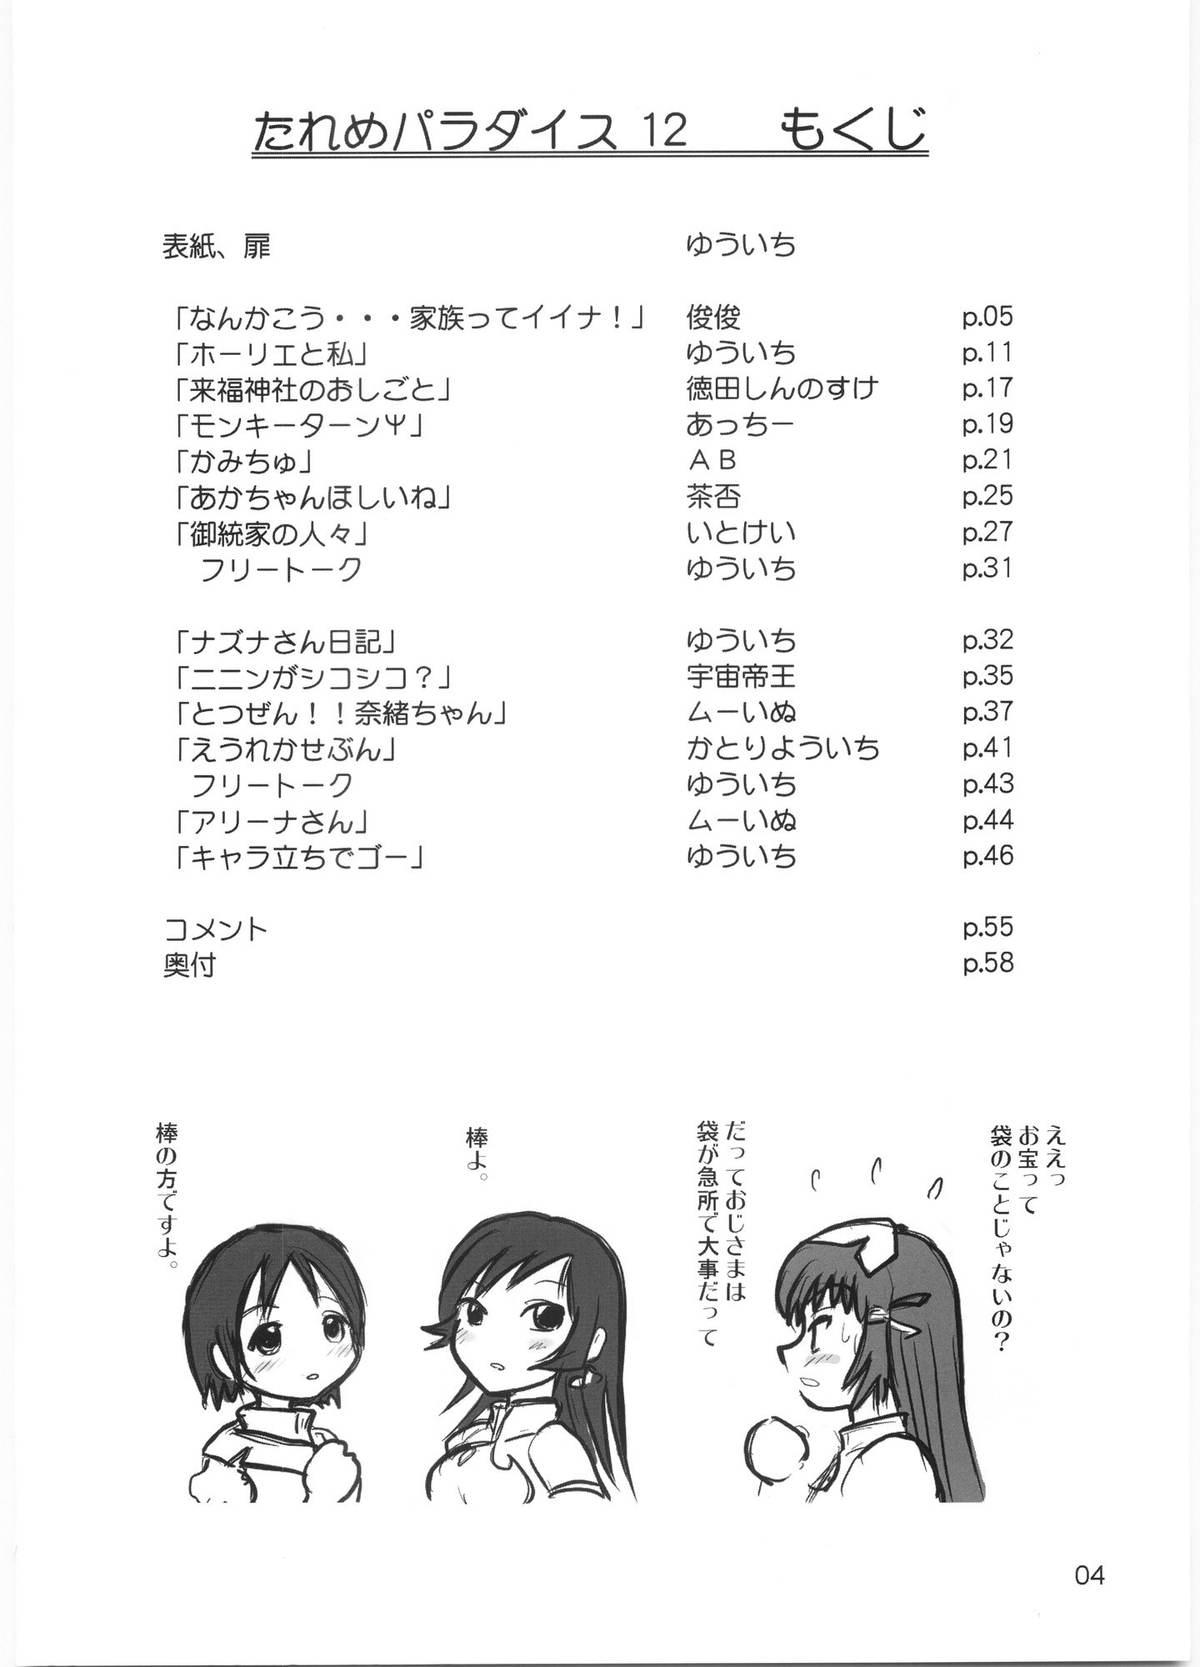 Sloppy Tareme Paradise Vol.12 - 2x2 shinobuden Amante - Page 3